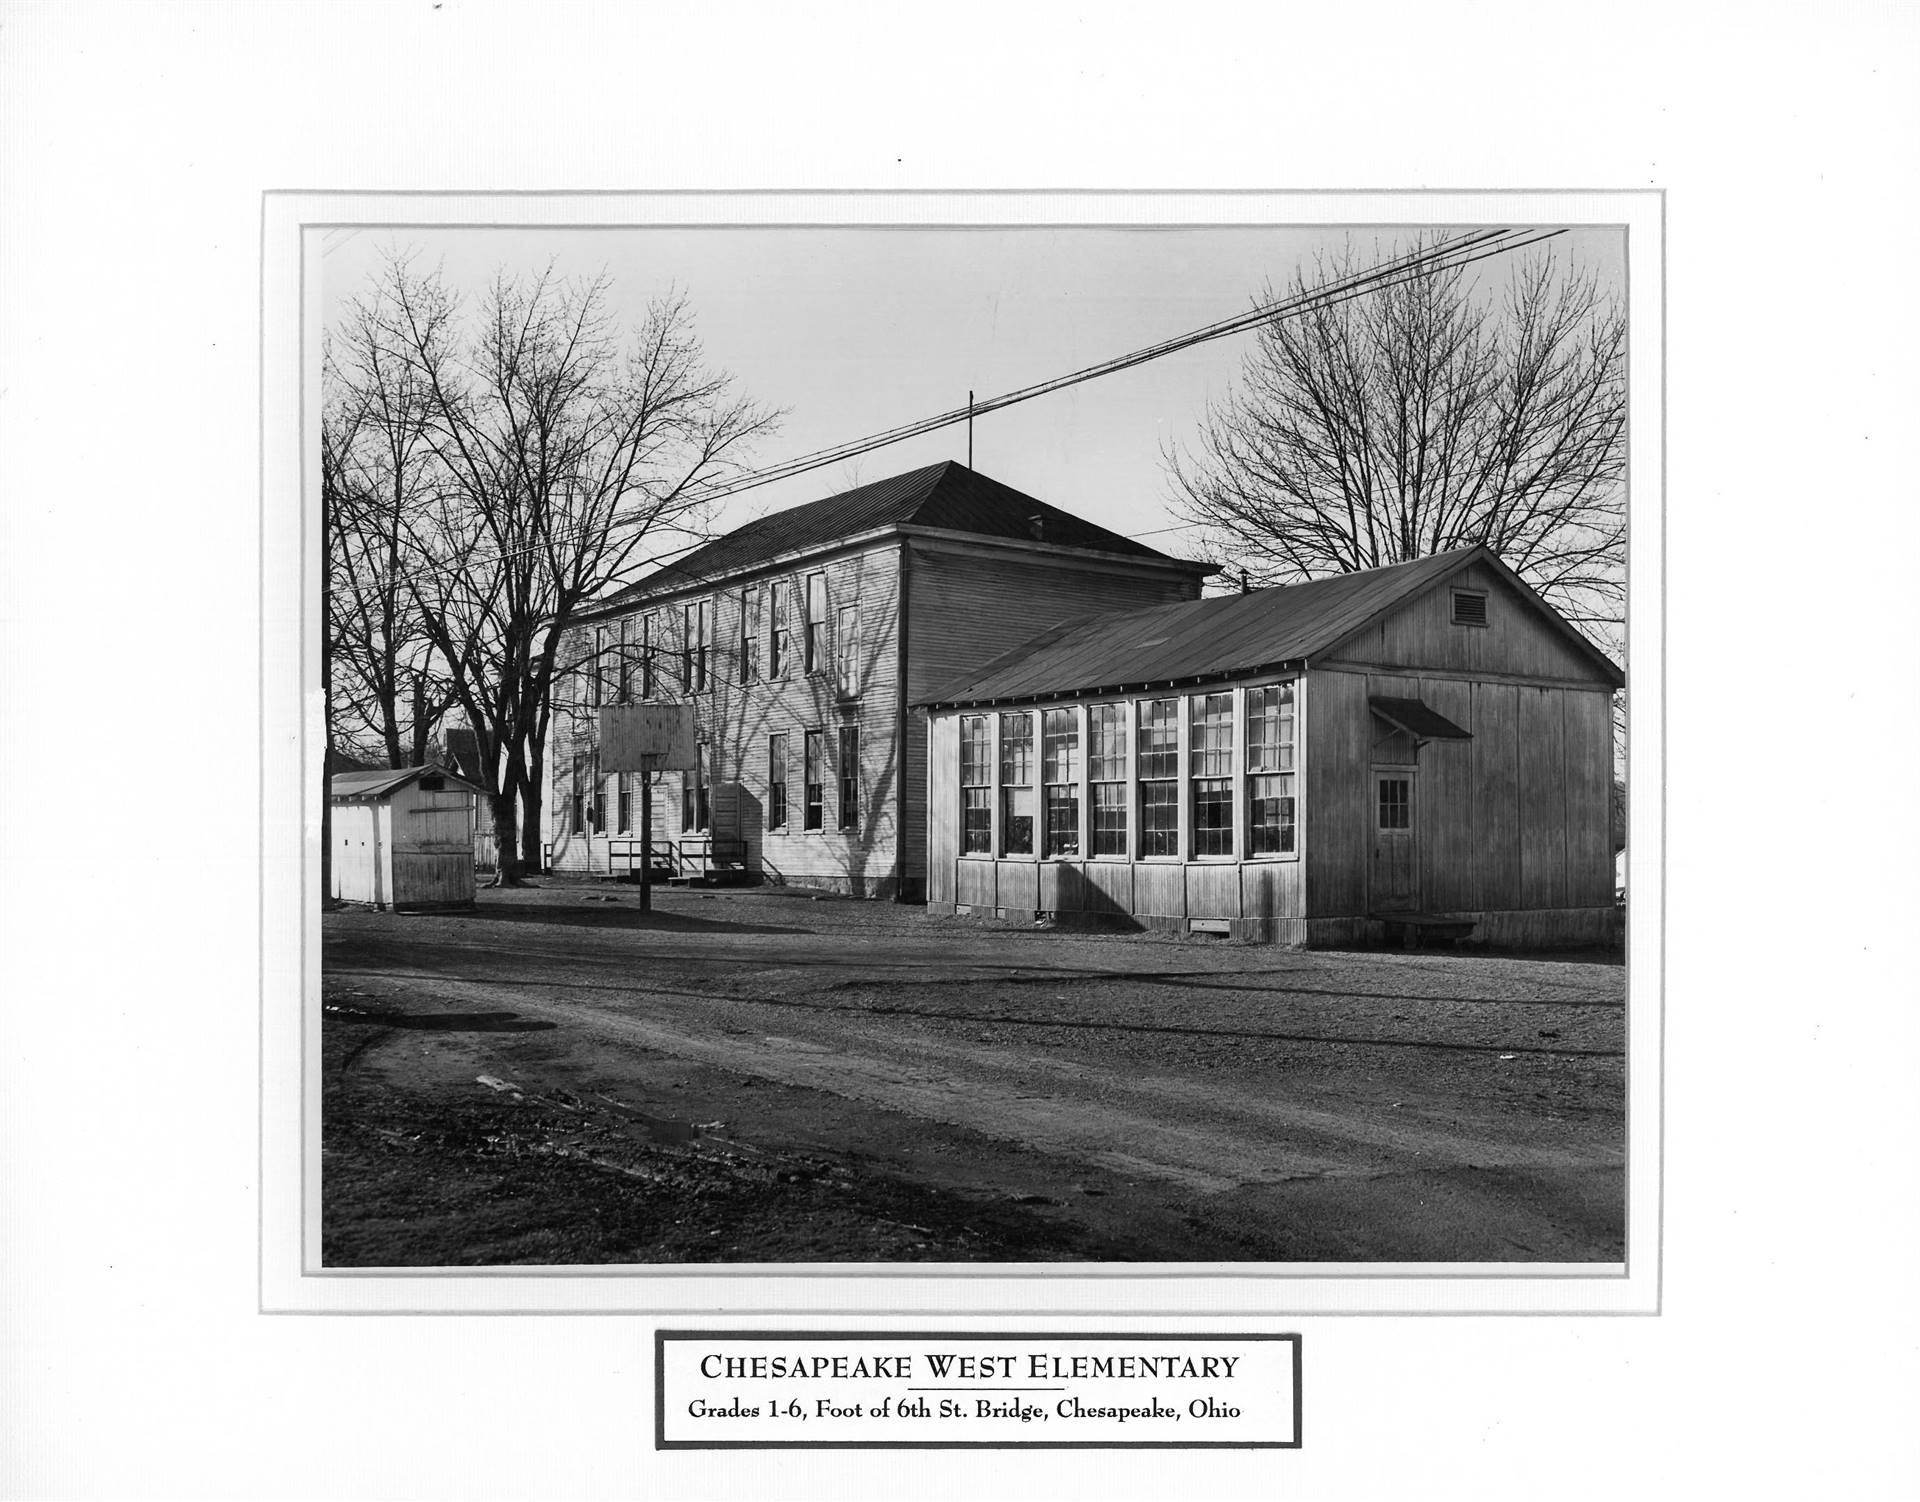 Chesapeake West Elementary School - Grades 1-6, Foot of 6th St Bridge, Chesapeake, Ohio